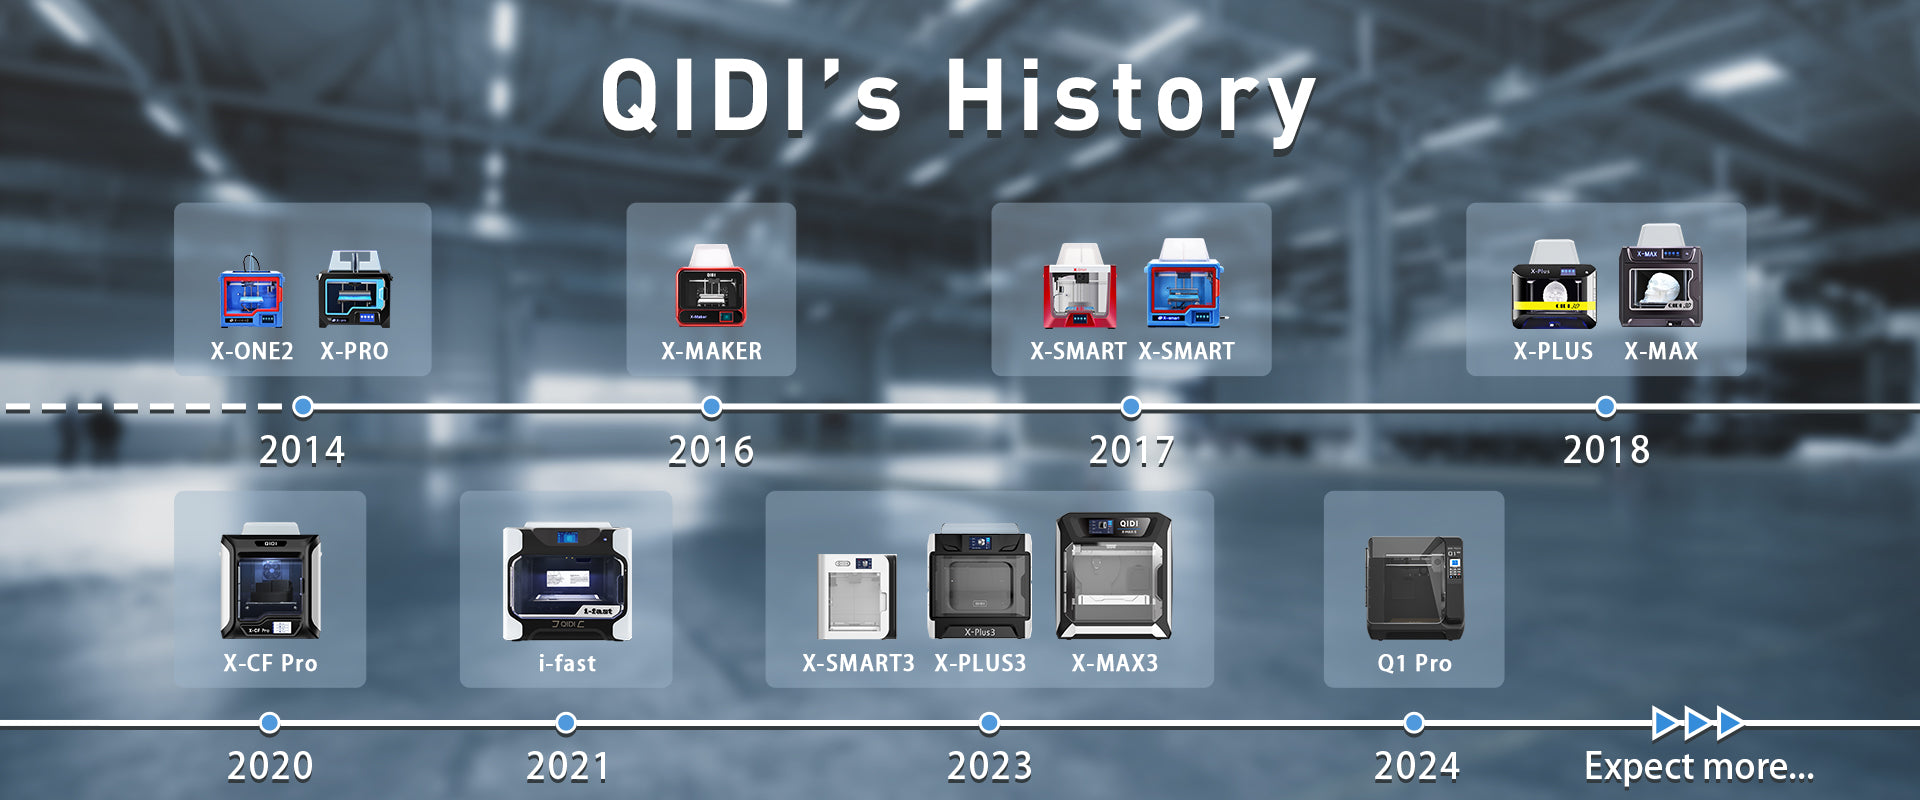 QIDI History